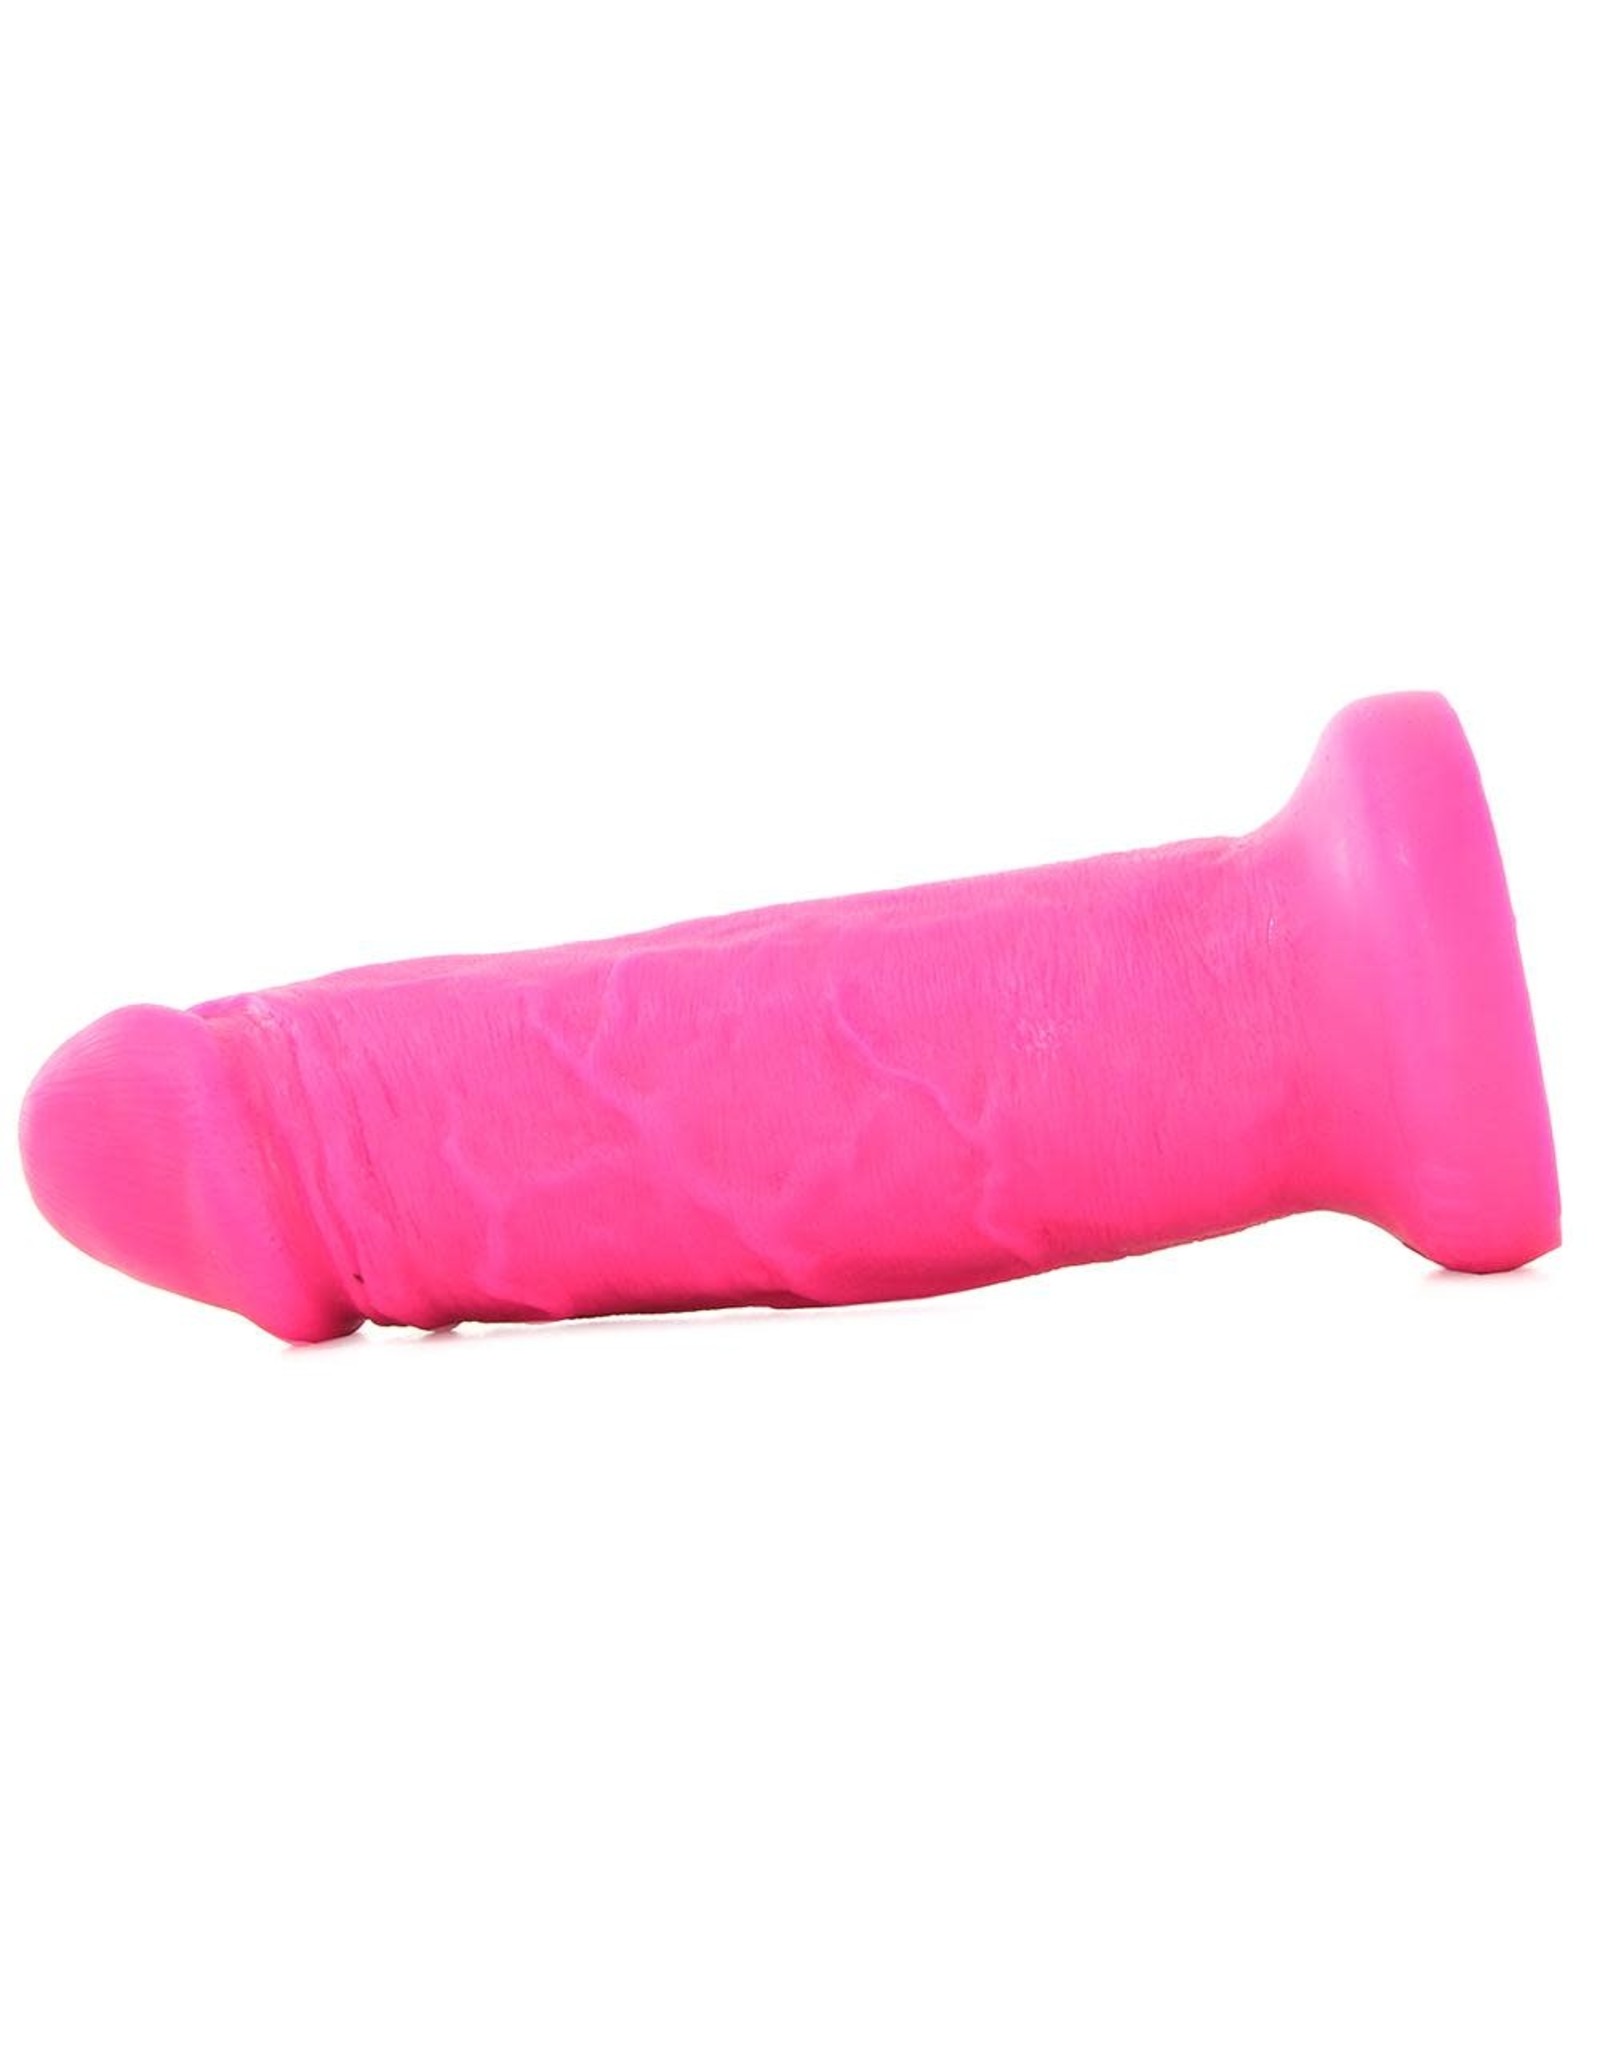 Pipedream Dillio - 6 Inch Chub - Pink